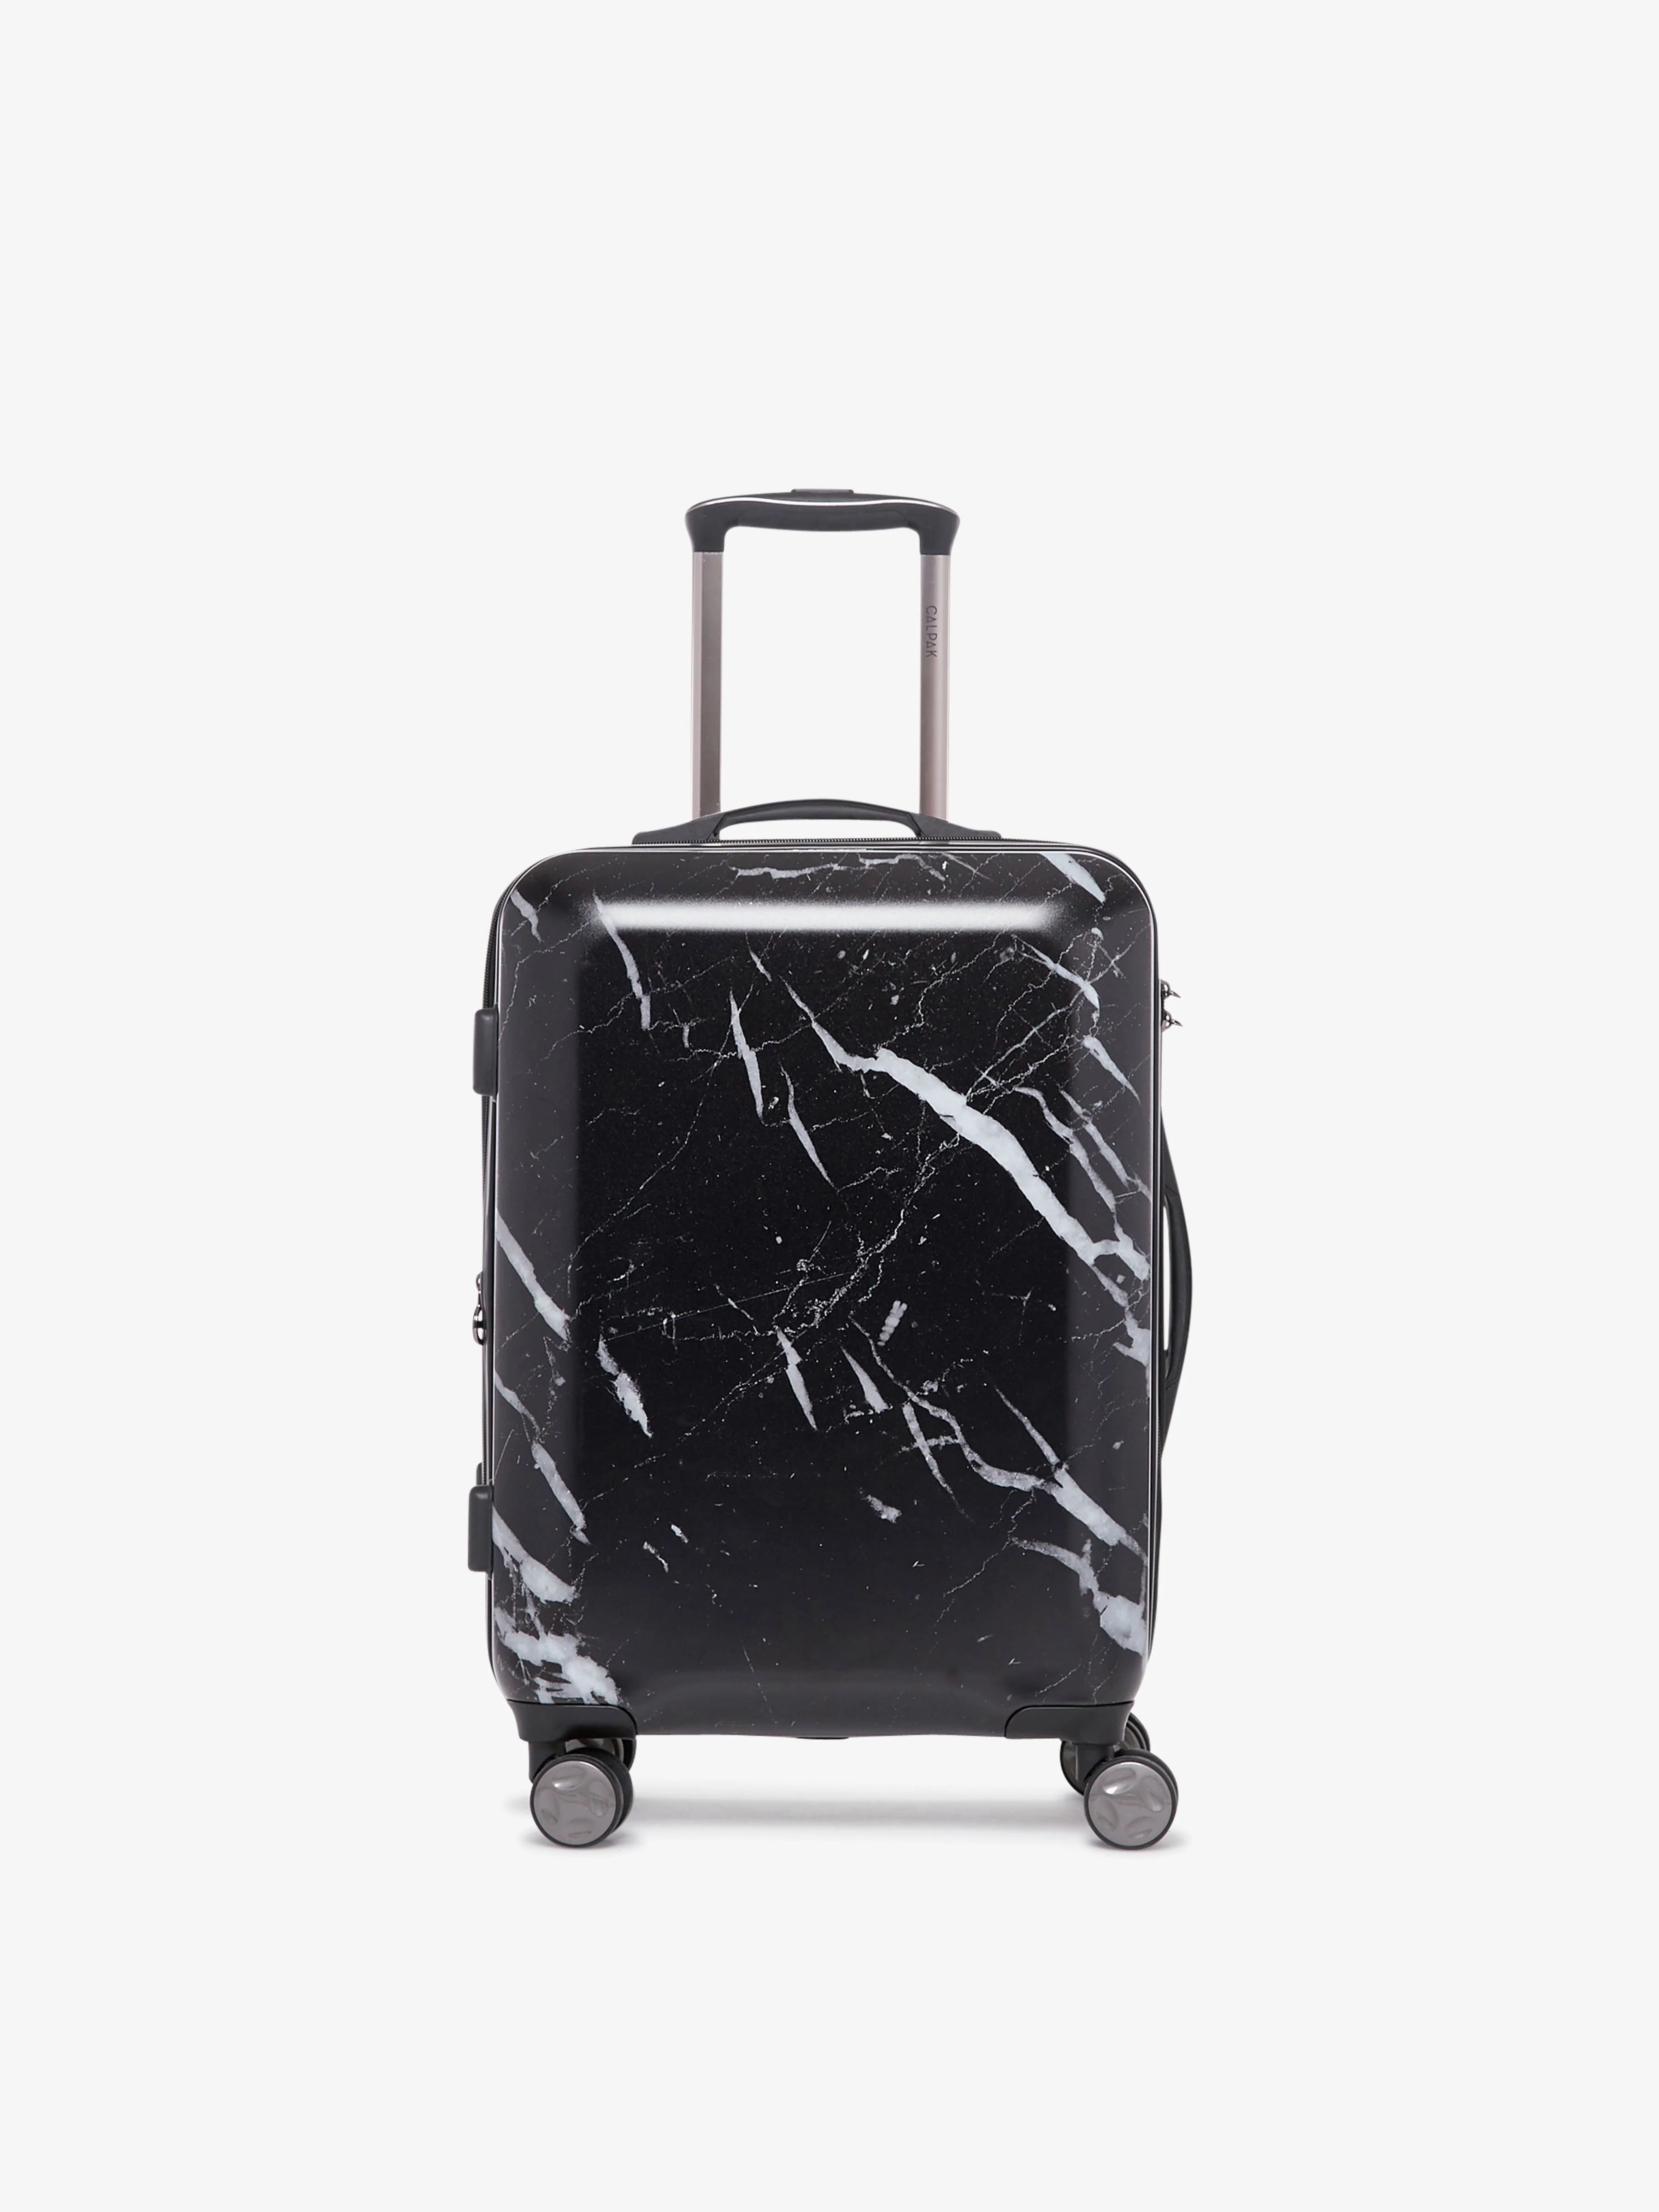 Astyll Carry-On Luggage | CALPAK Travel